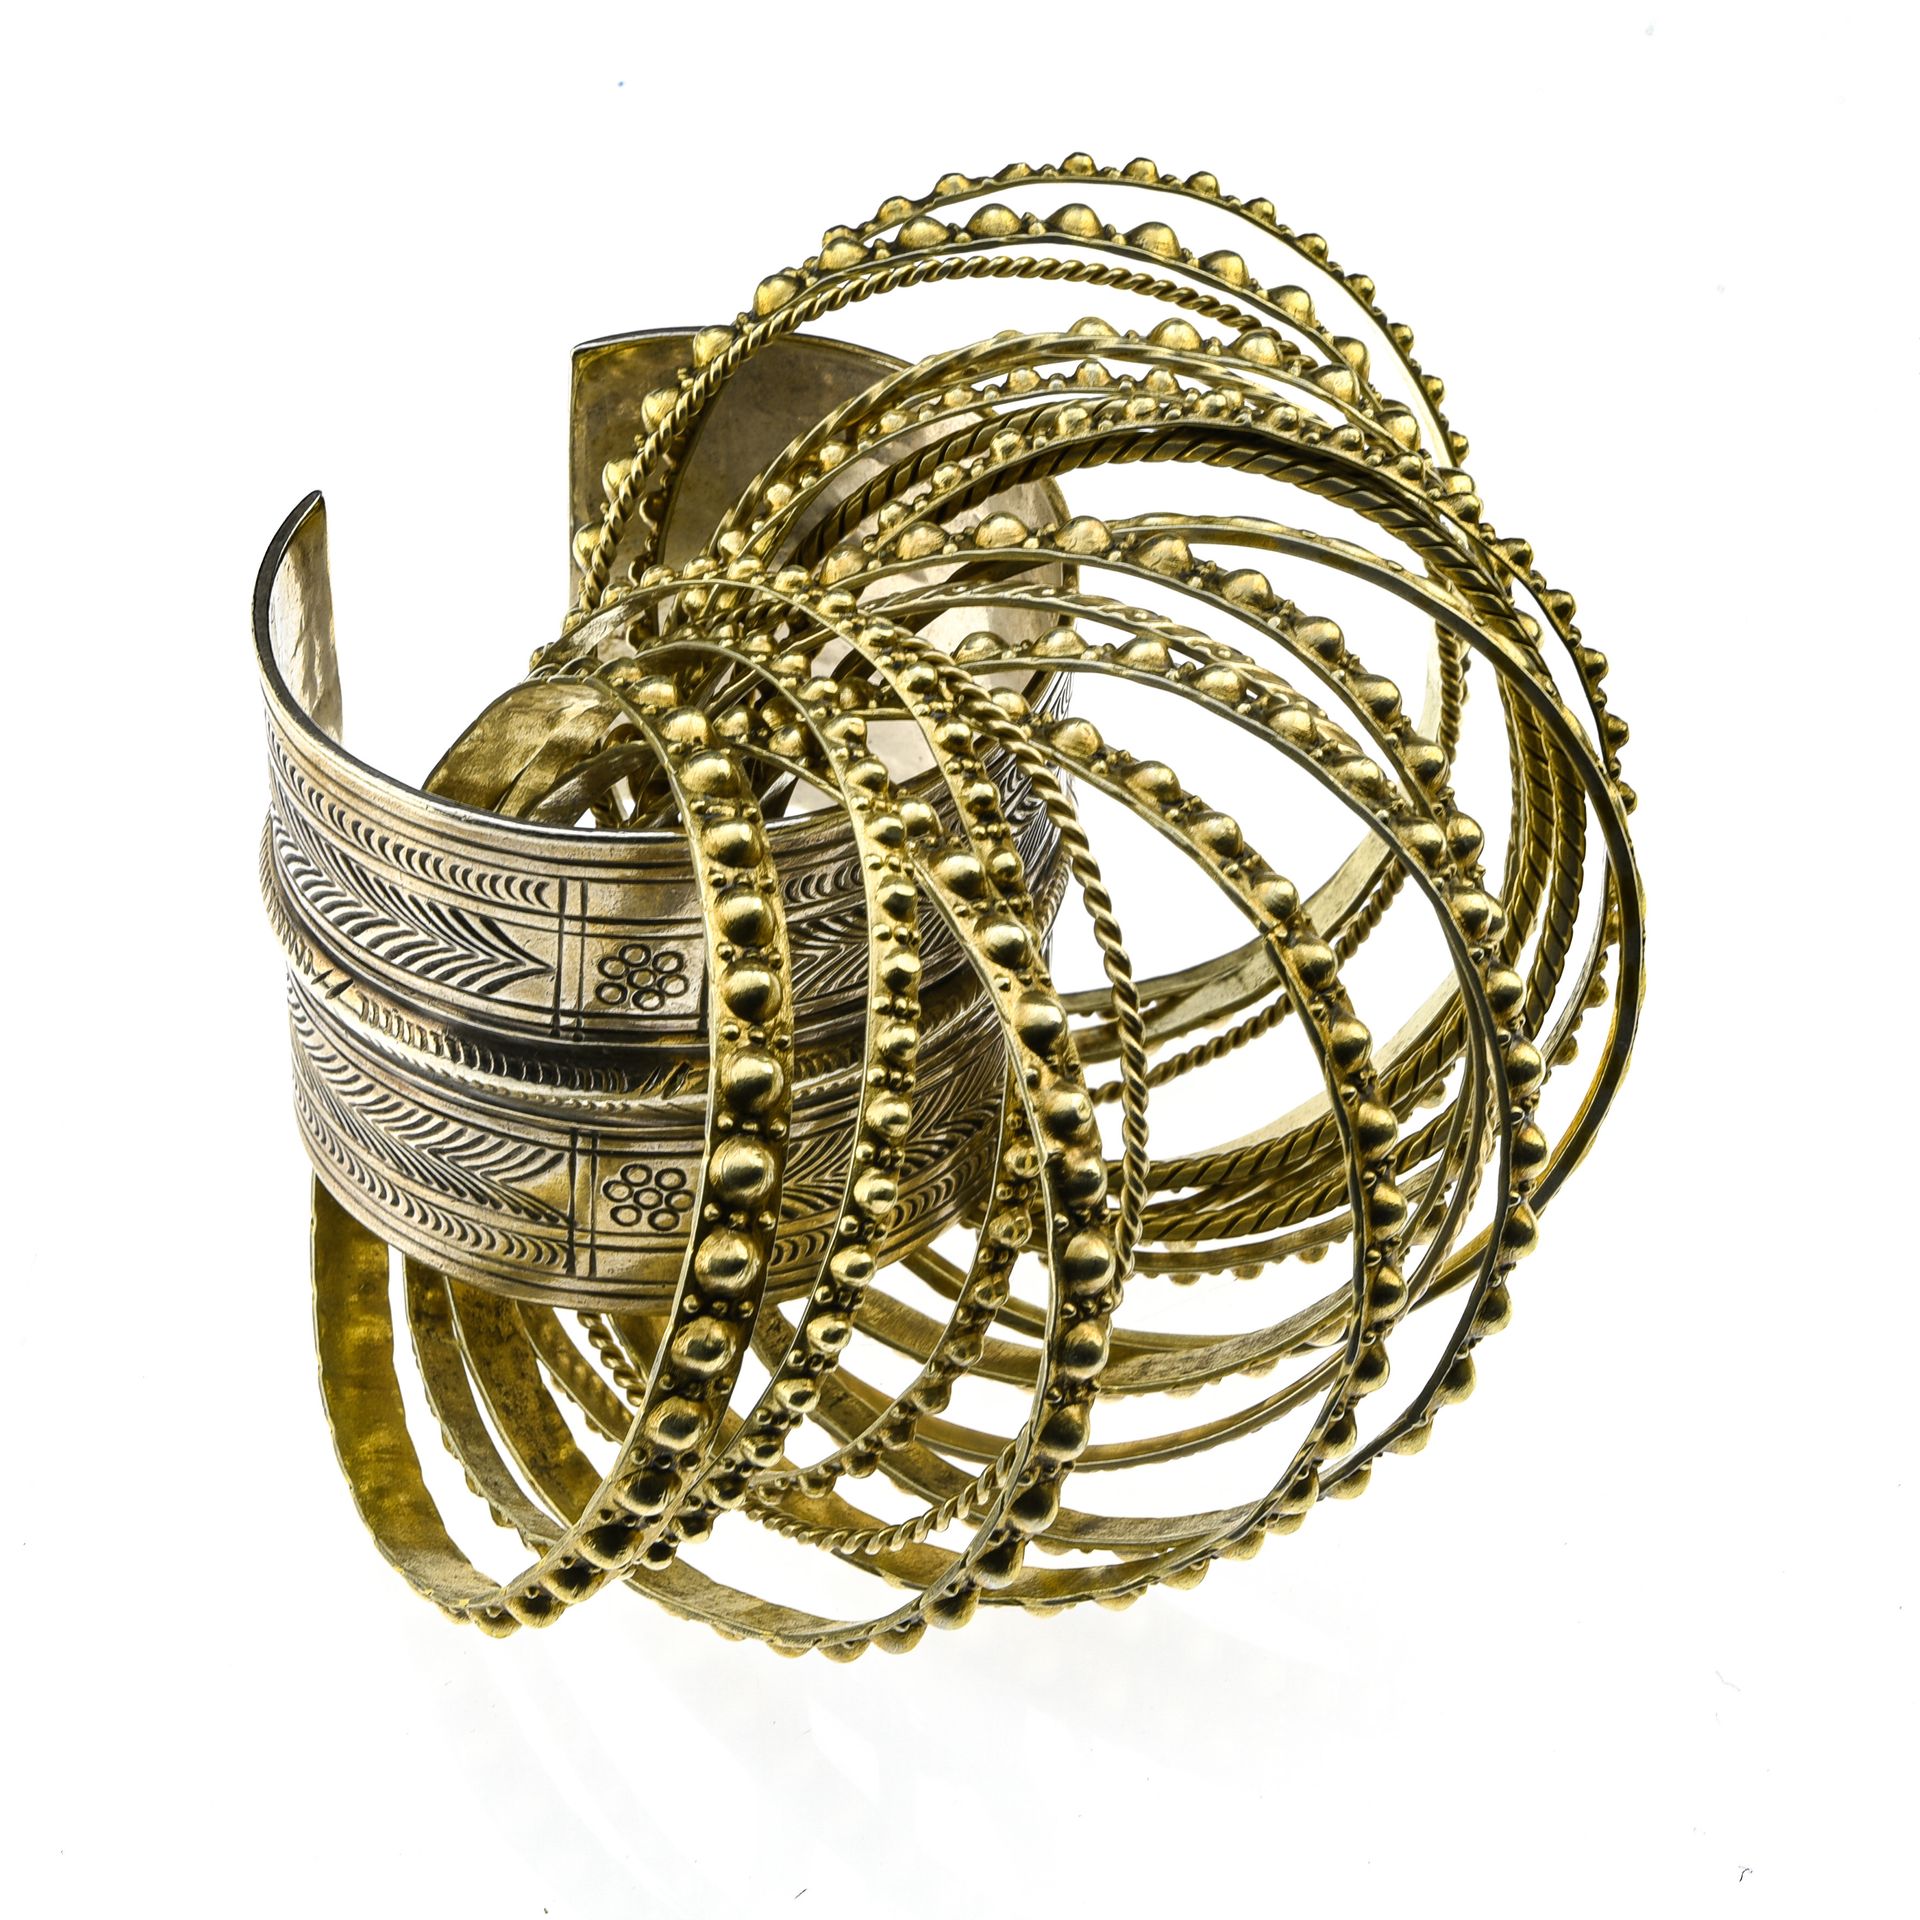 Ensemble de bracelets EGYPT

Set of bracelets



Composed of 19 delicate bracele&hellip;